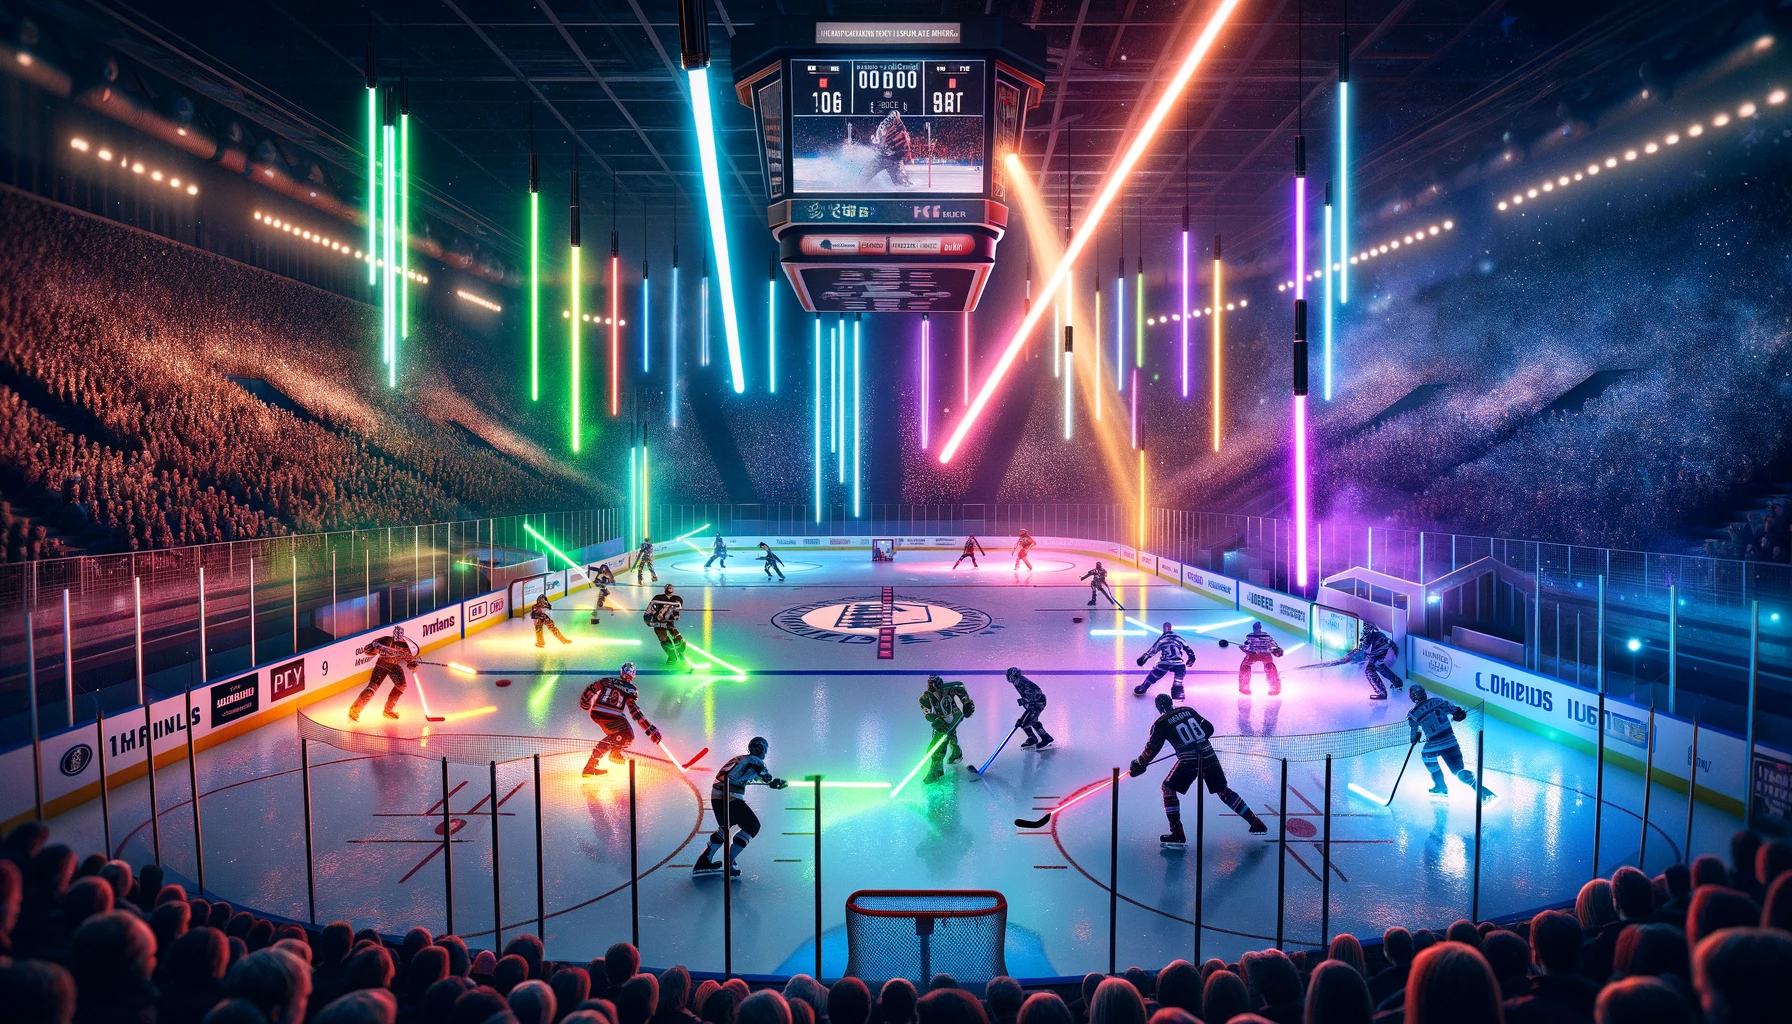 lightsabers-introduced-to-finnish-ice-hockey-csdn